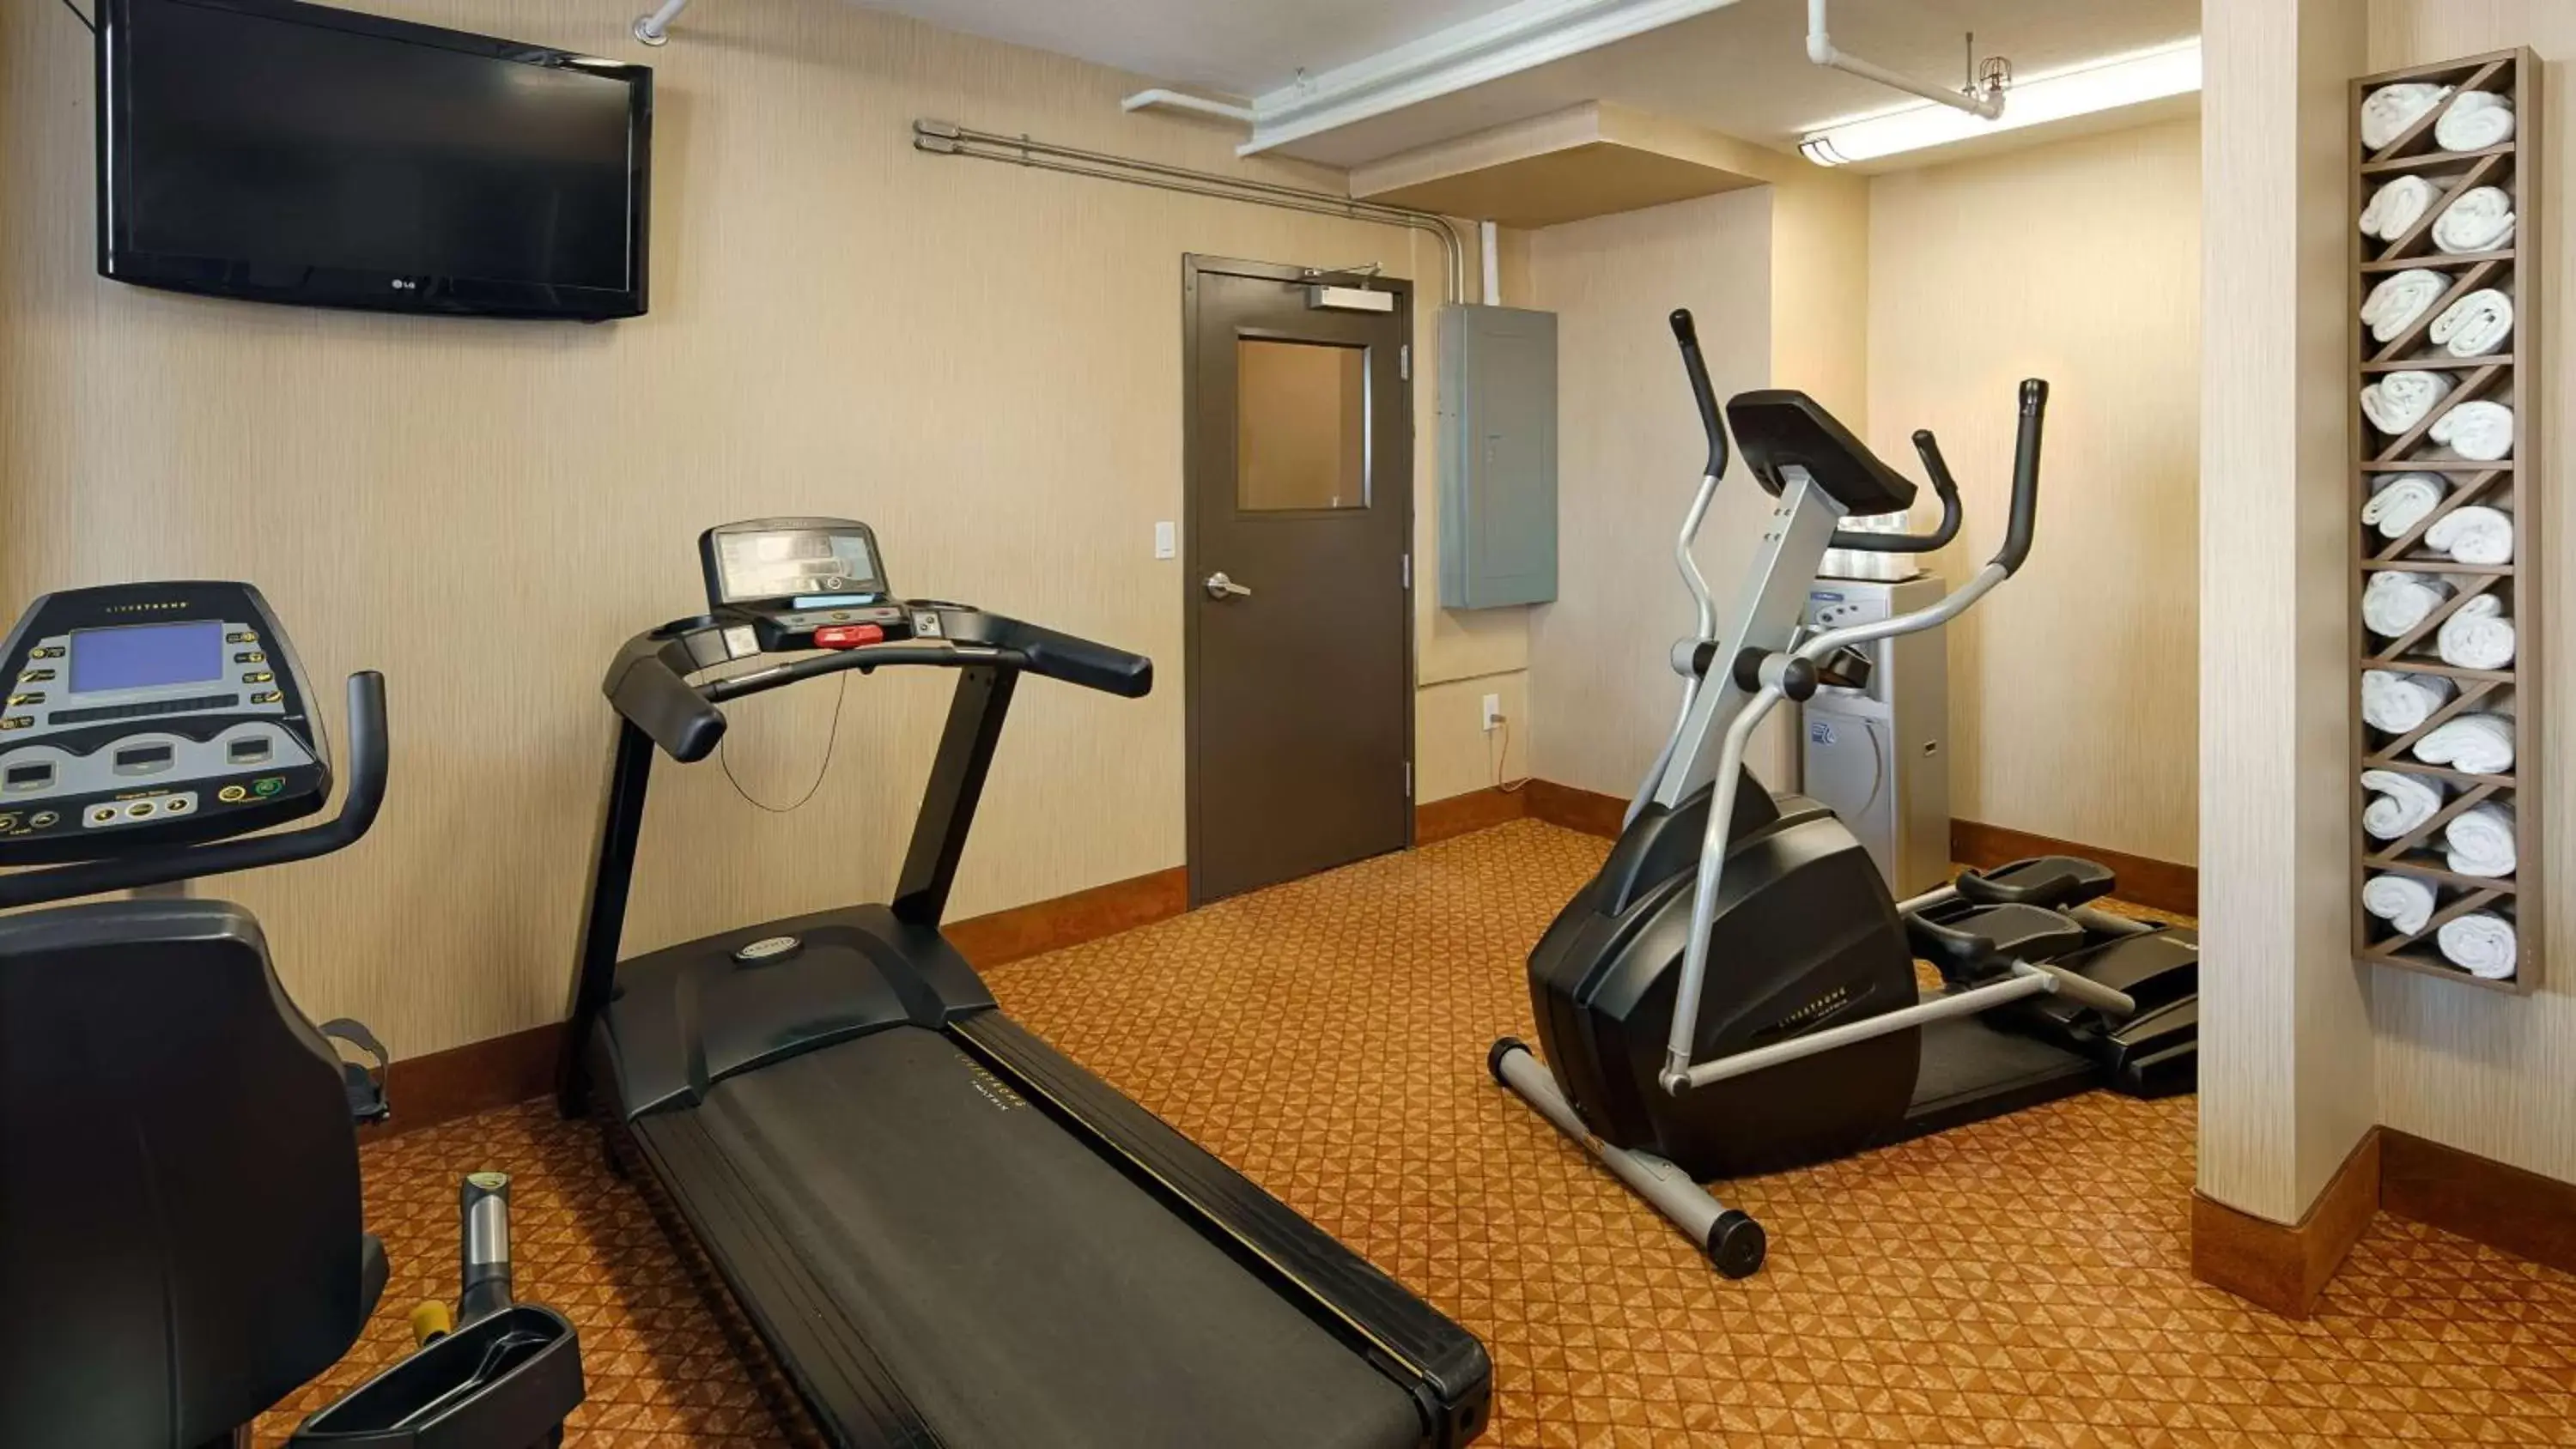 Fitness centre/facilities, Fitness Center/Facilities in Best Western Plus Estevan Inn & Suites